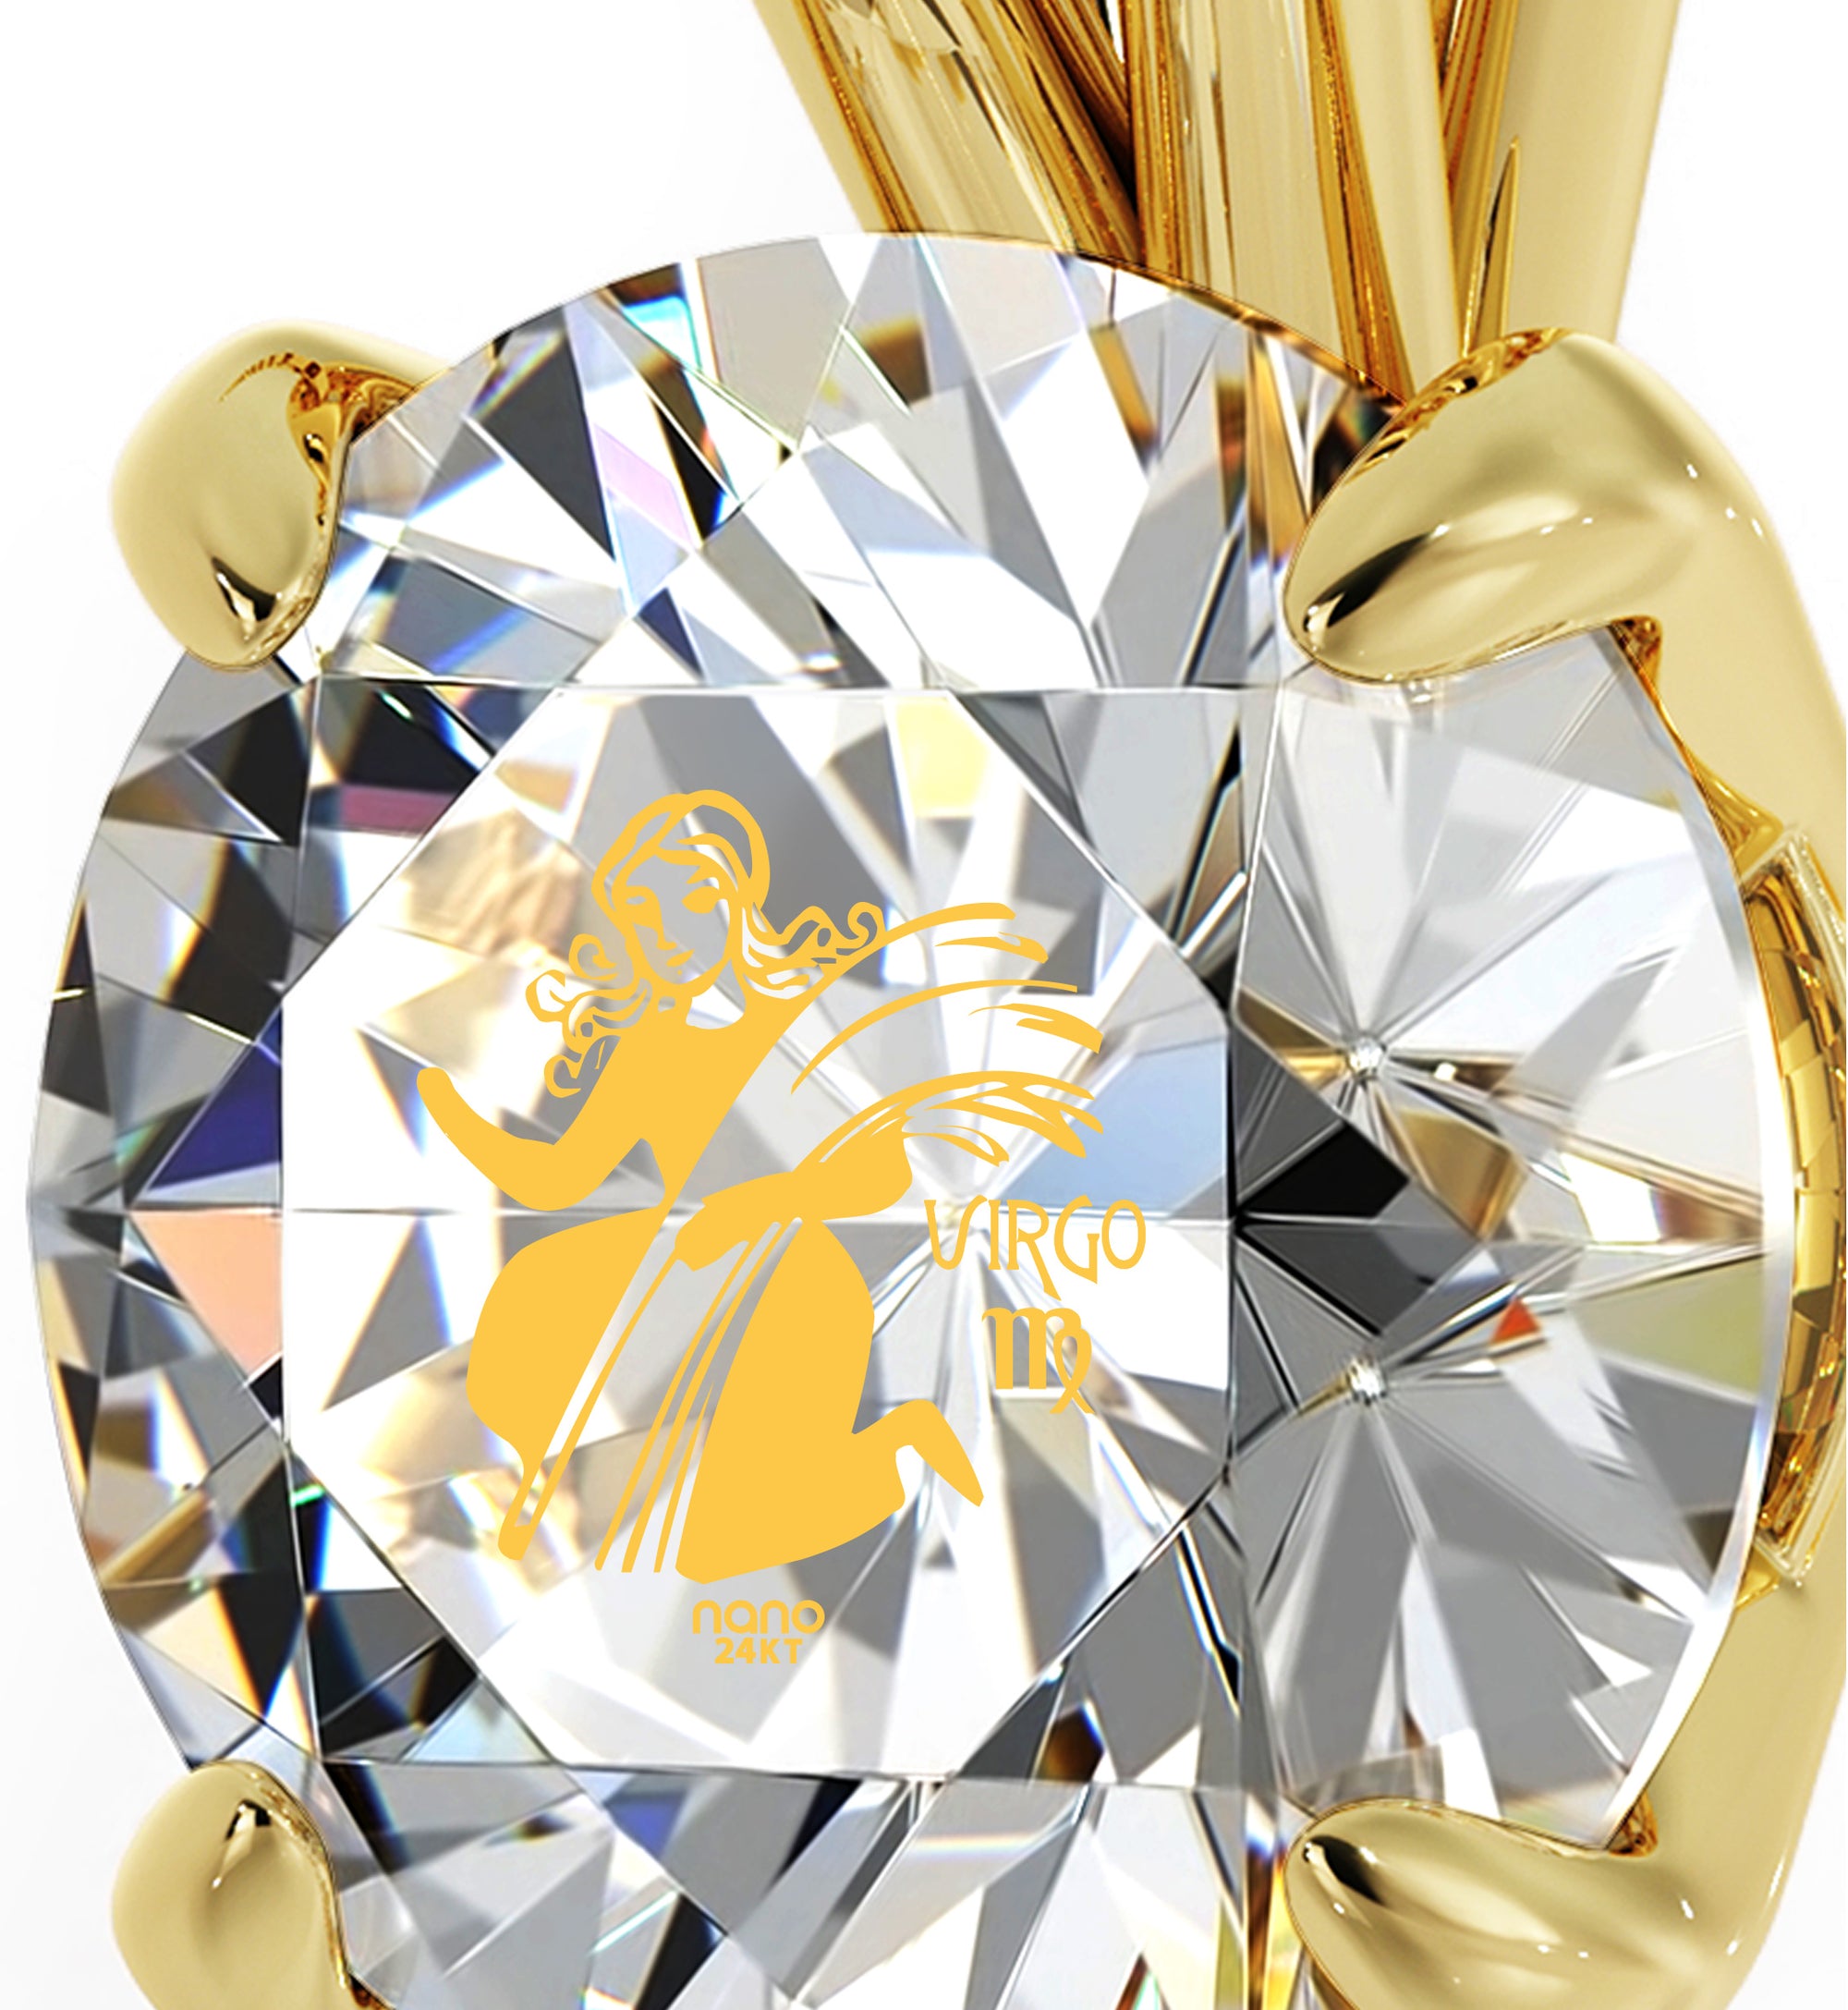 14k Gold Virgo Necklace | Classic Zodiac Jewelry with a Difference -  NanoStyle Jewelry